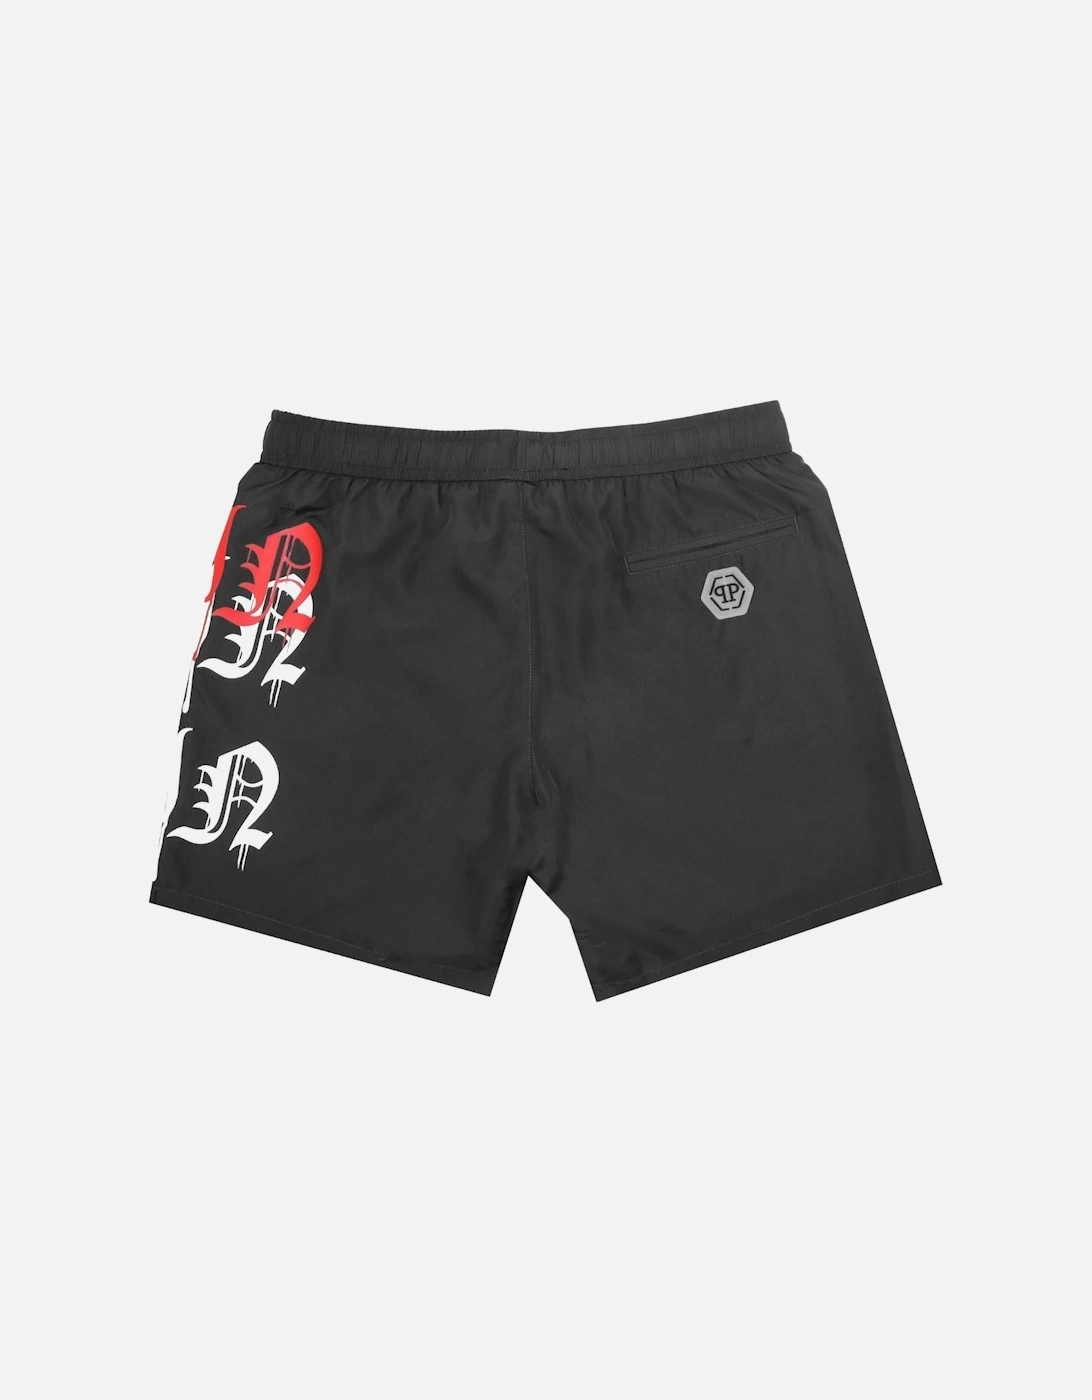 Melting Logos Black Swim Shorts